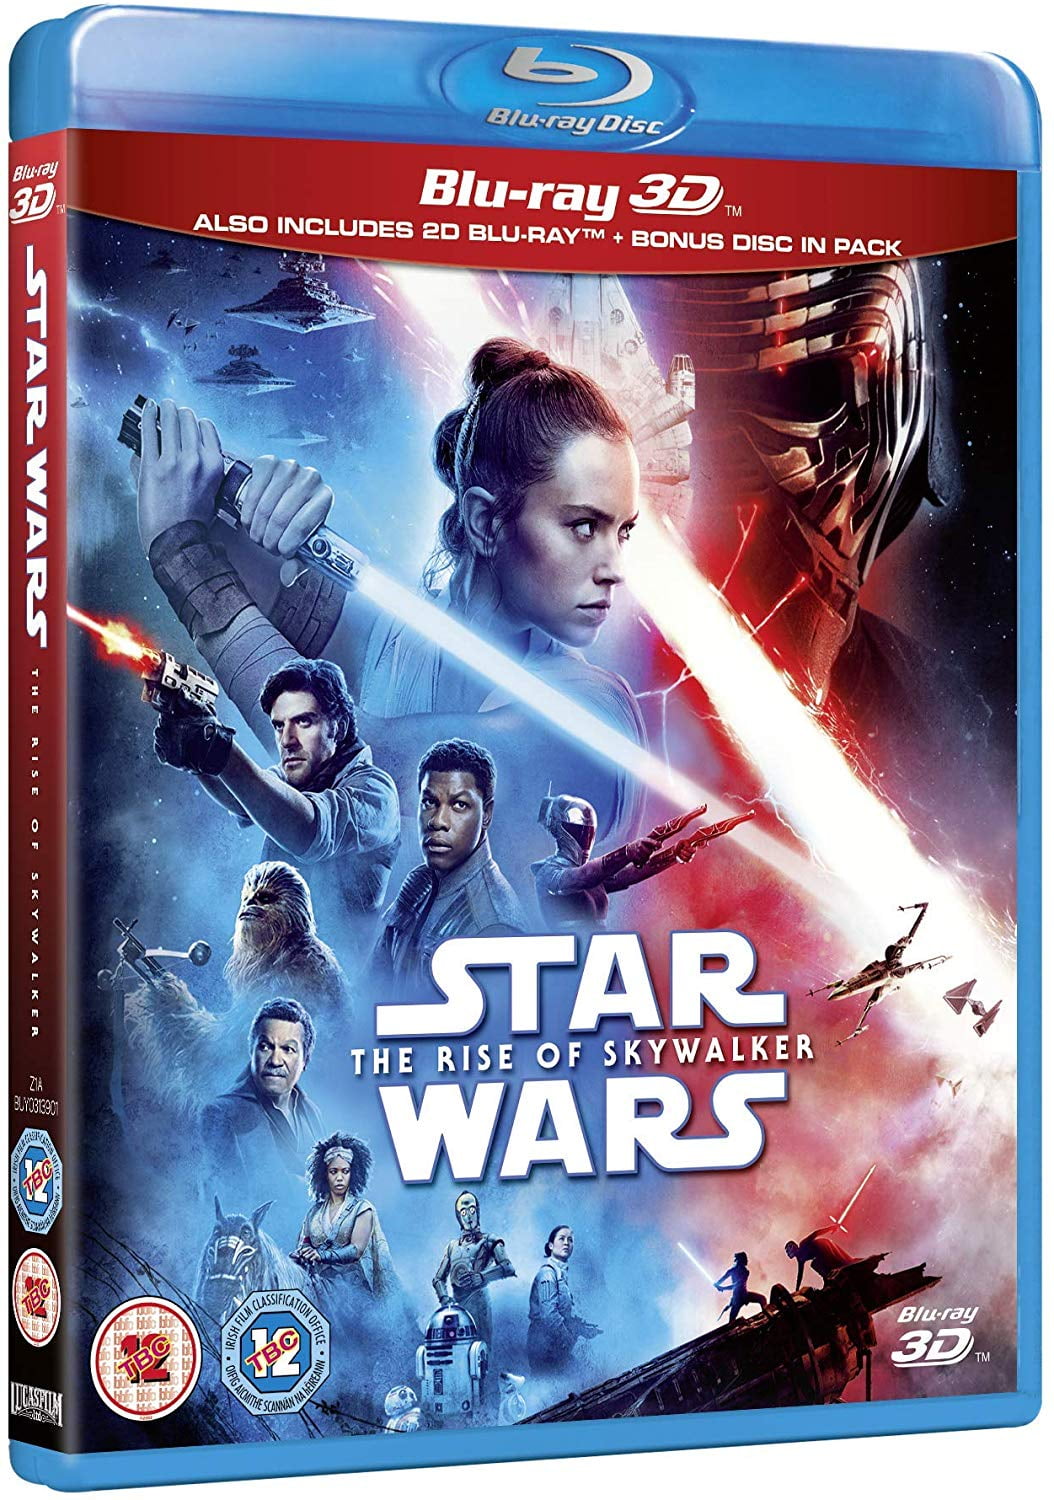 kort Communisme Tram Star Wars: The Rise of Skywalker 3D Blu-ray 2019 Region Free - Walmart.com